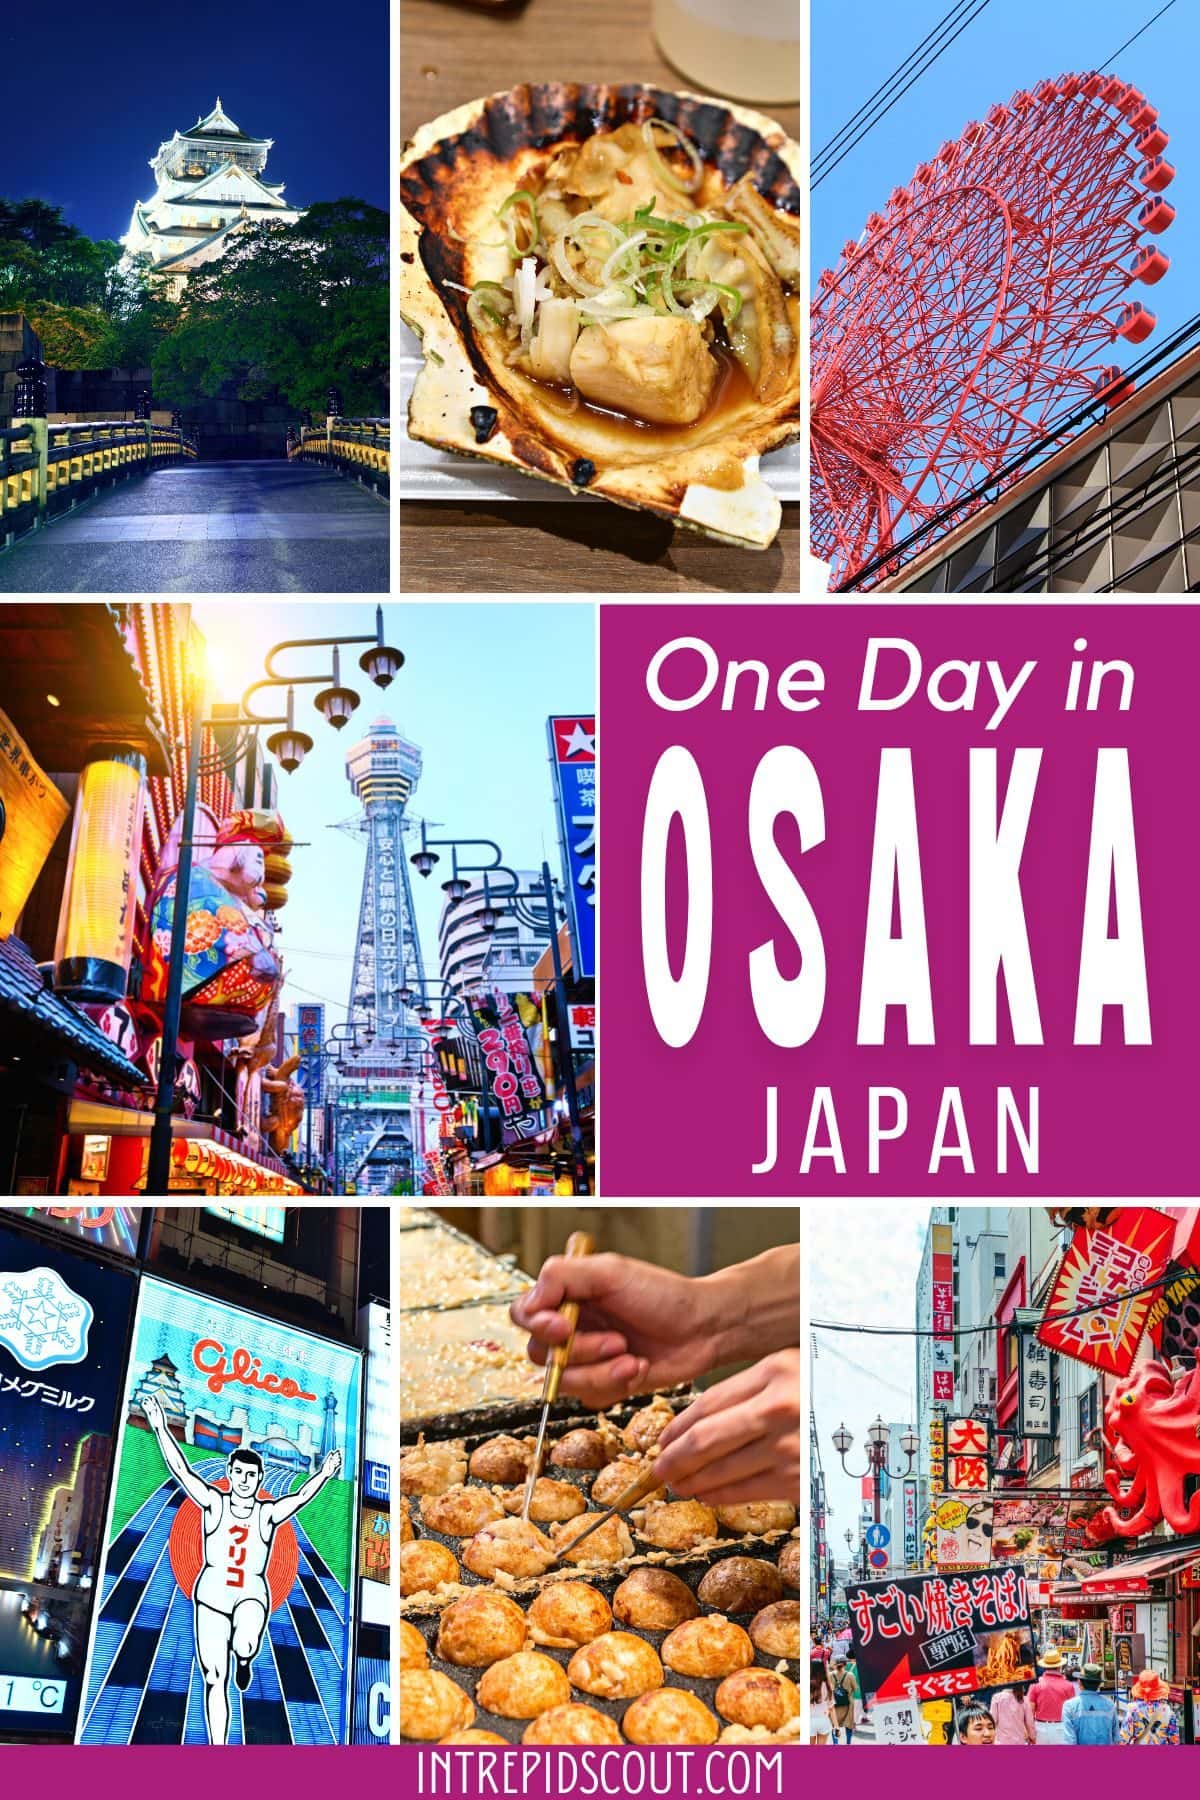 One Day in Osaka